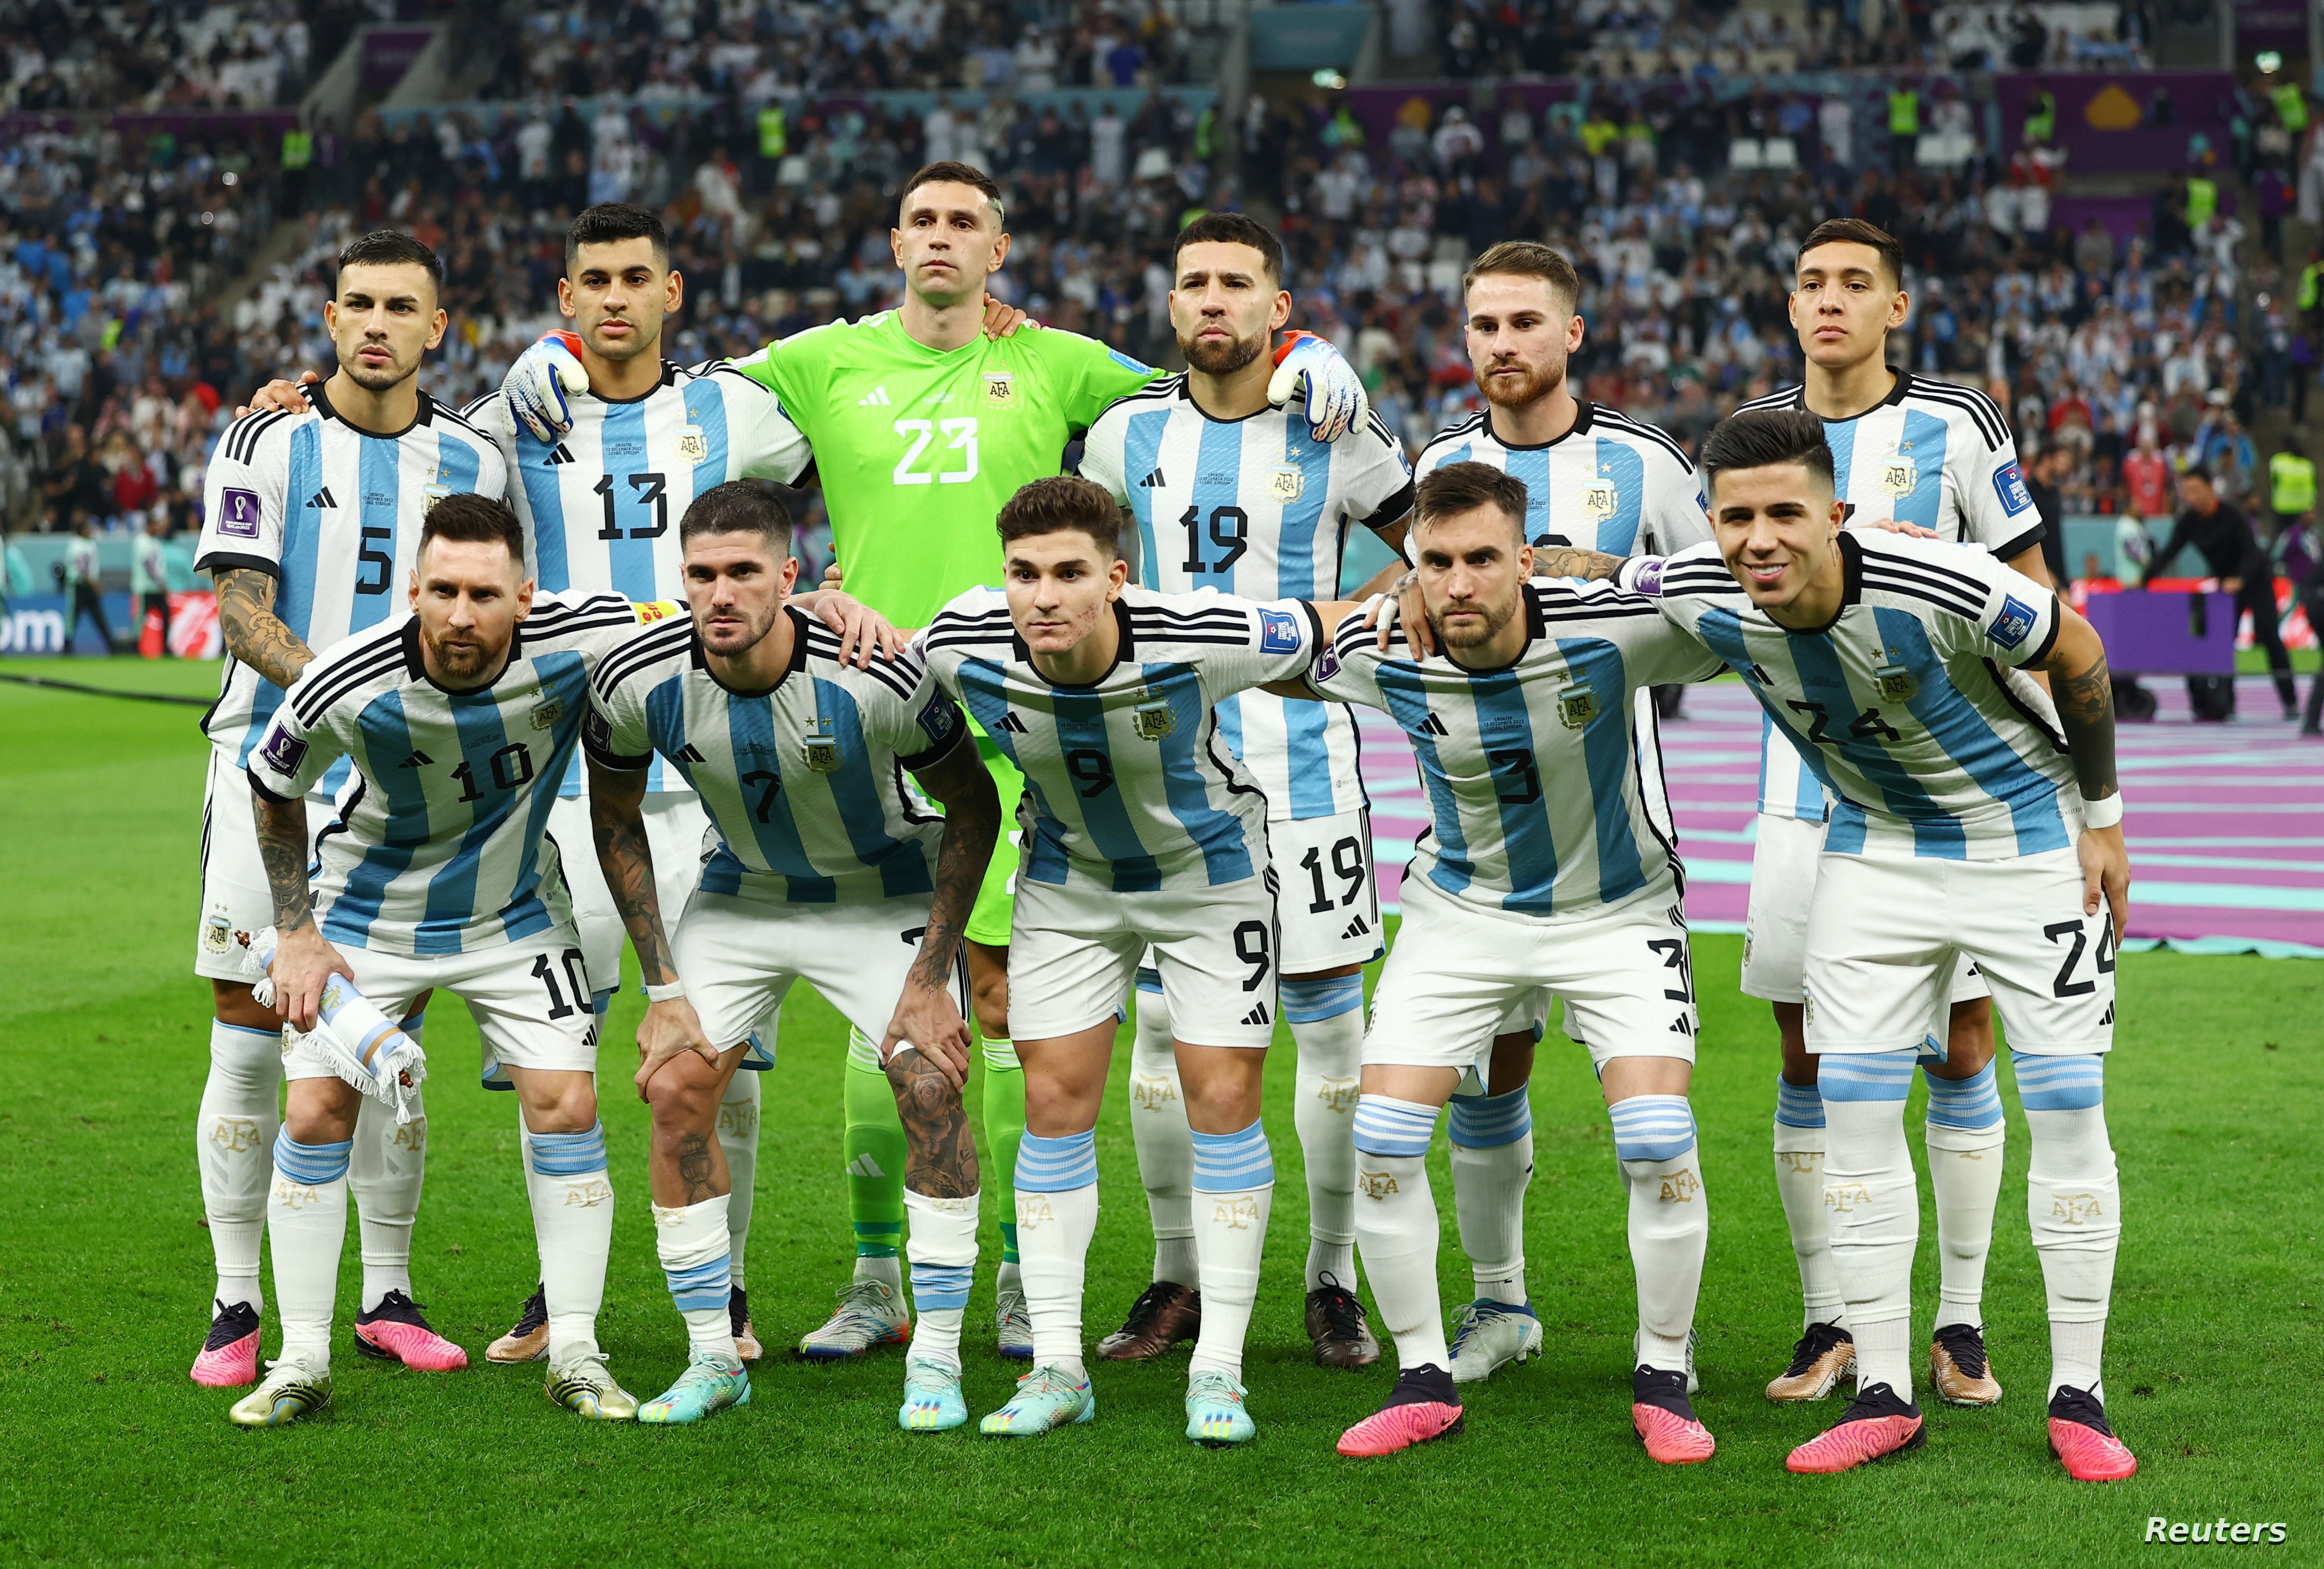 Argentina national team